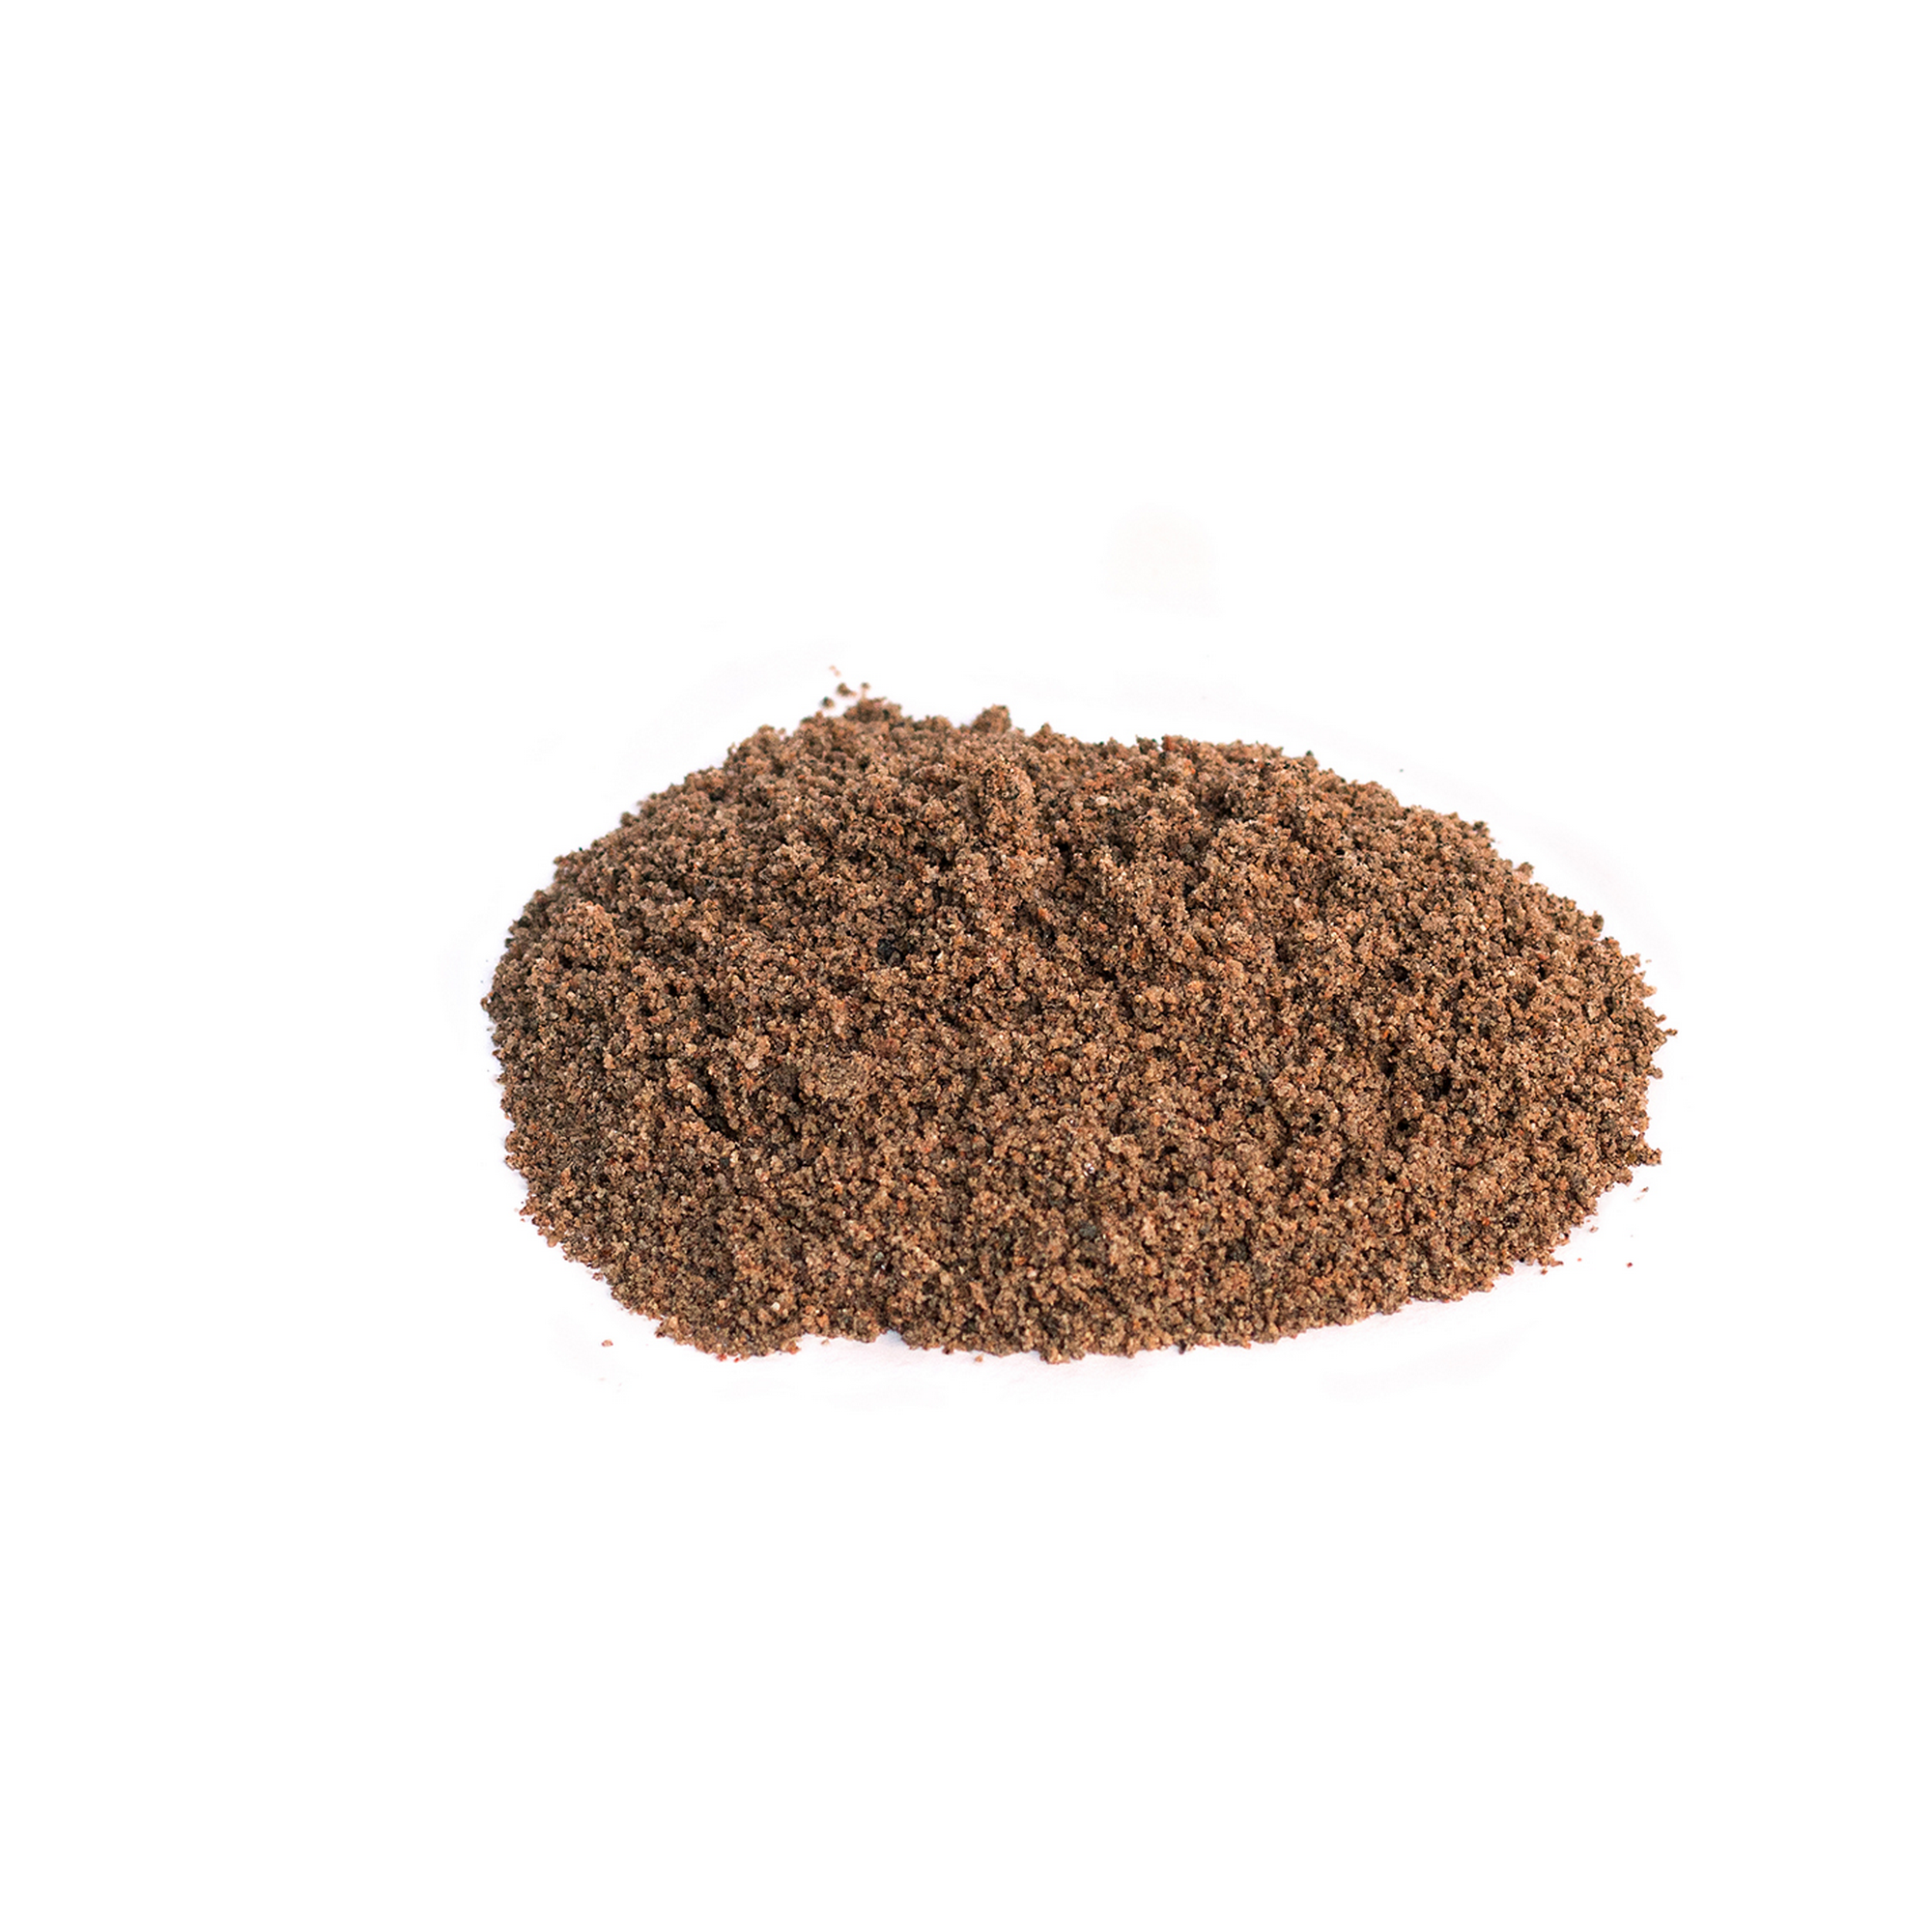 Fugensplitt rot/braun 0/2 mm ml + product picture